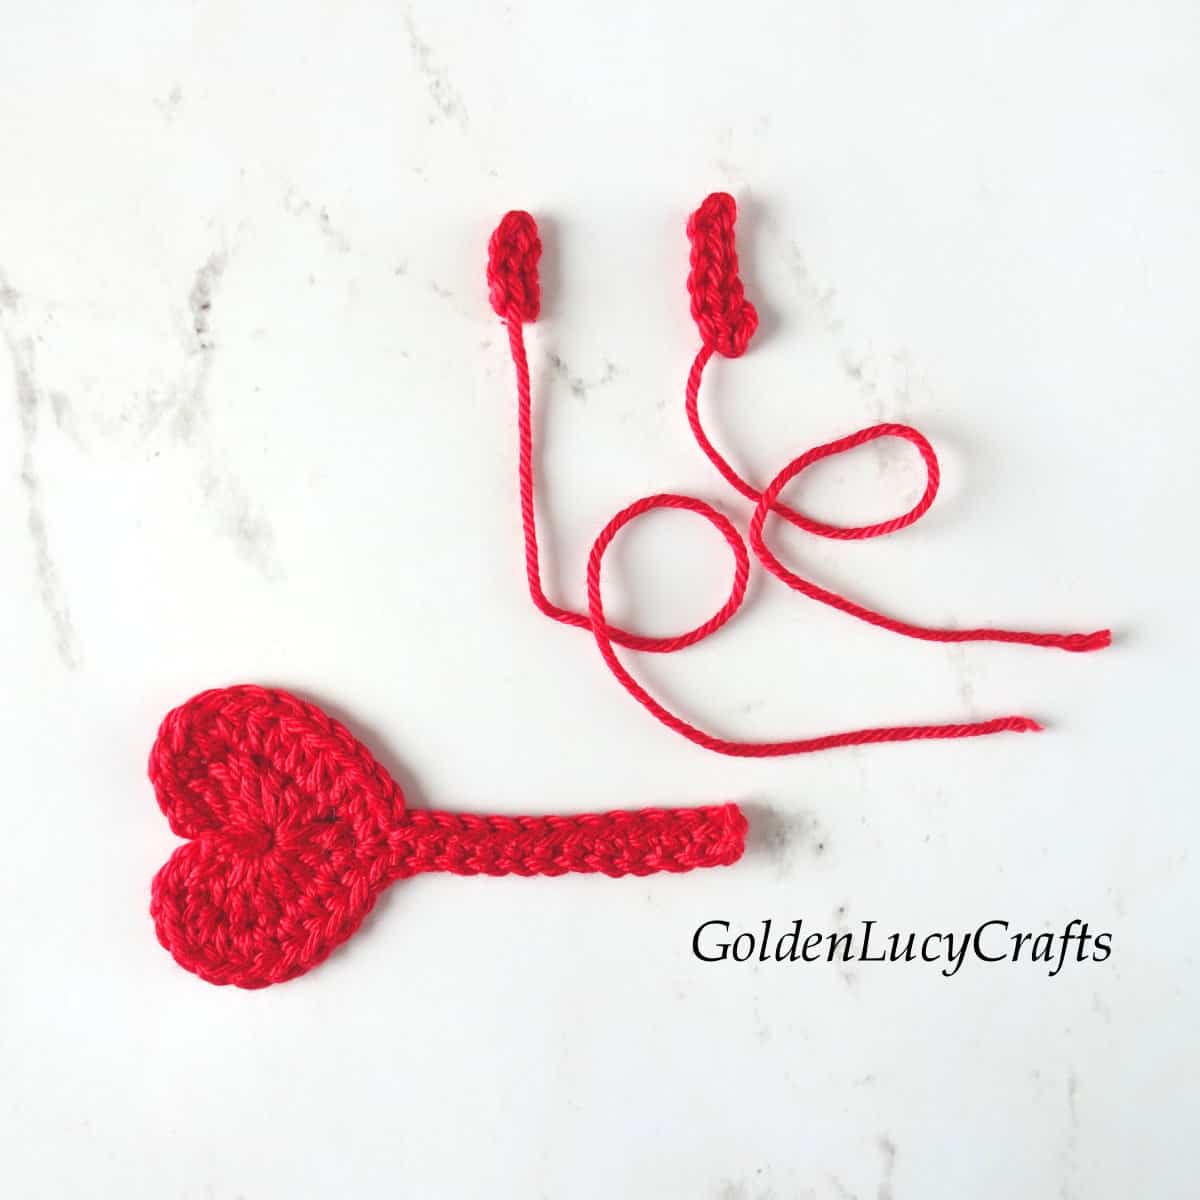 Parts of crocheted heart-shaped key.